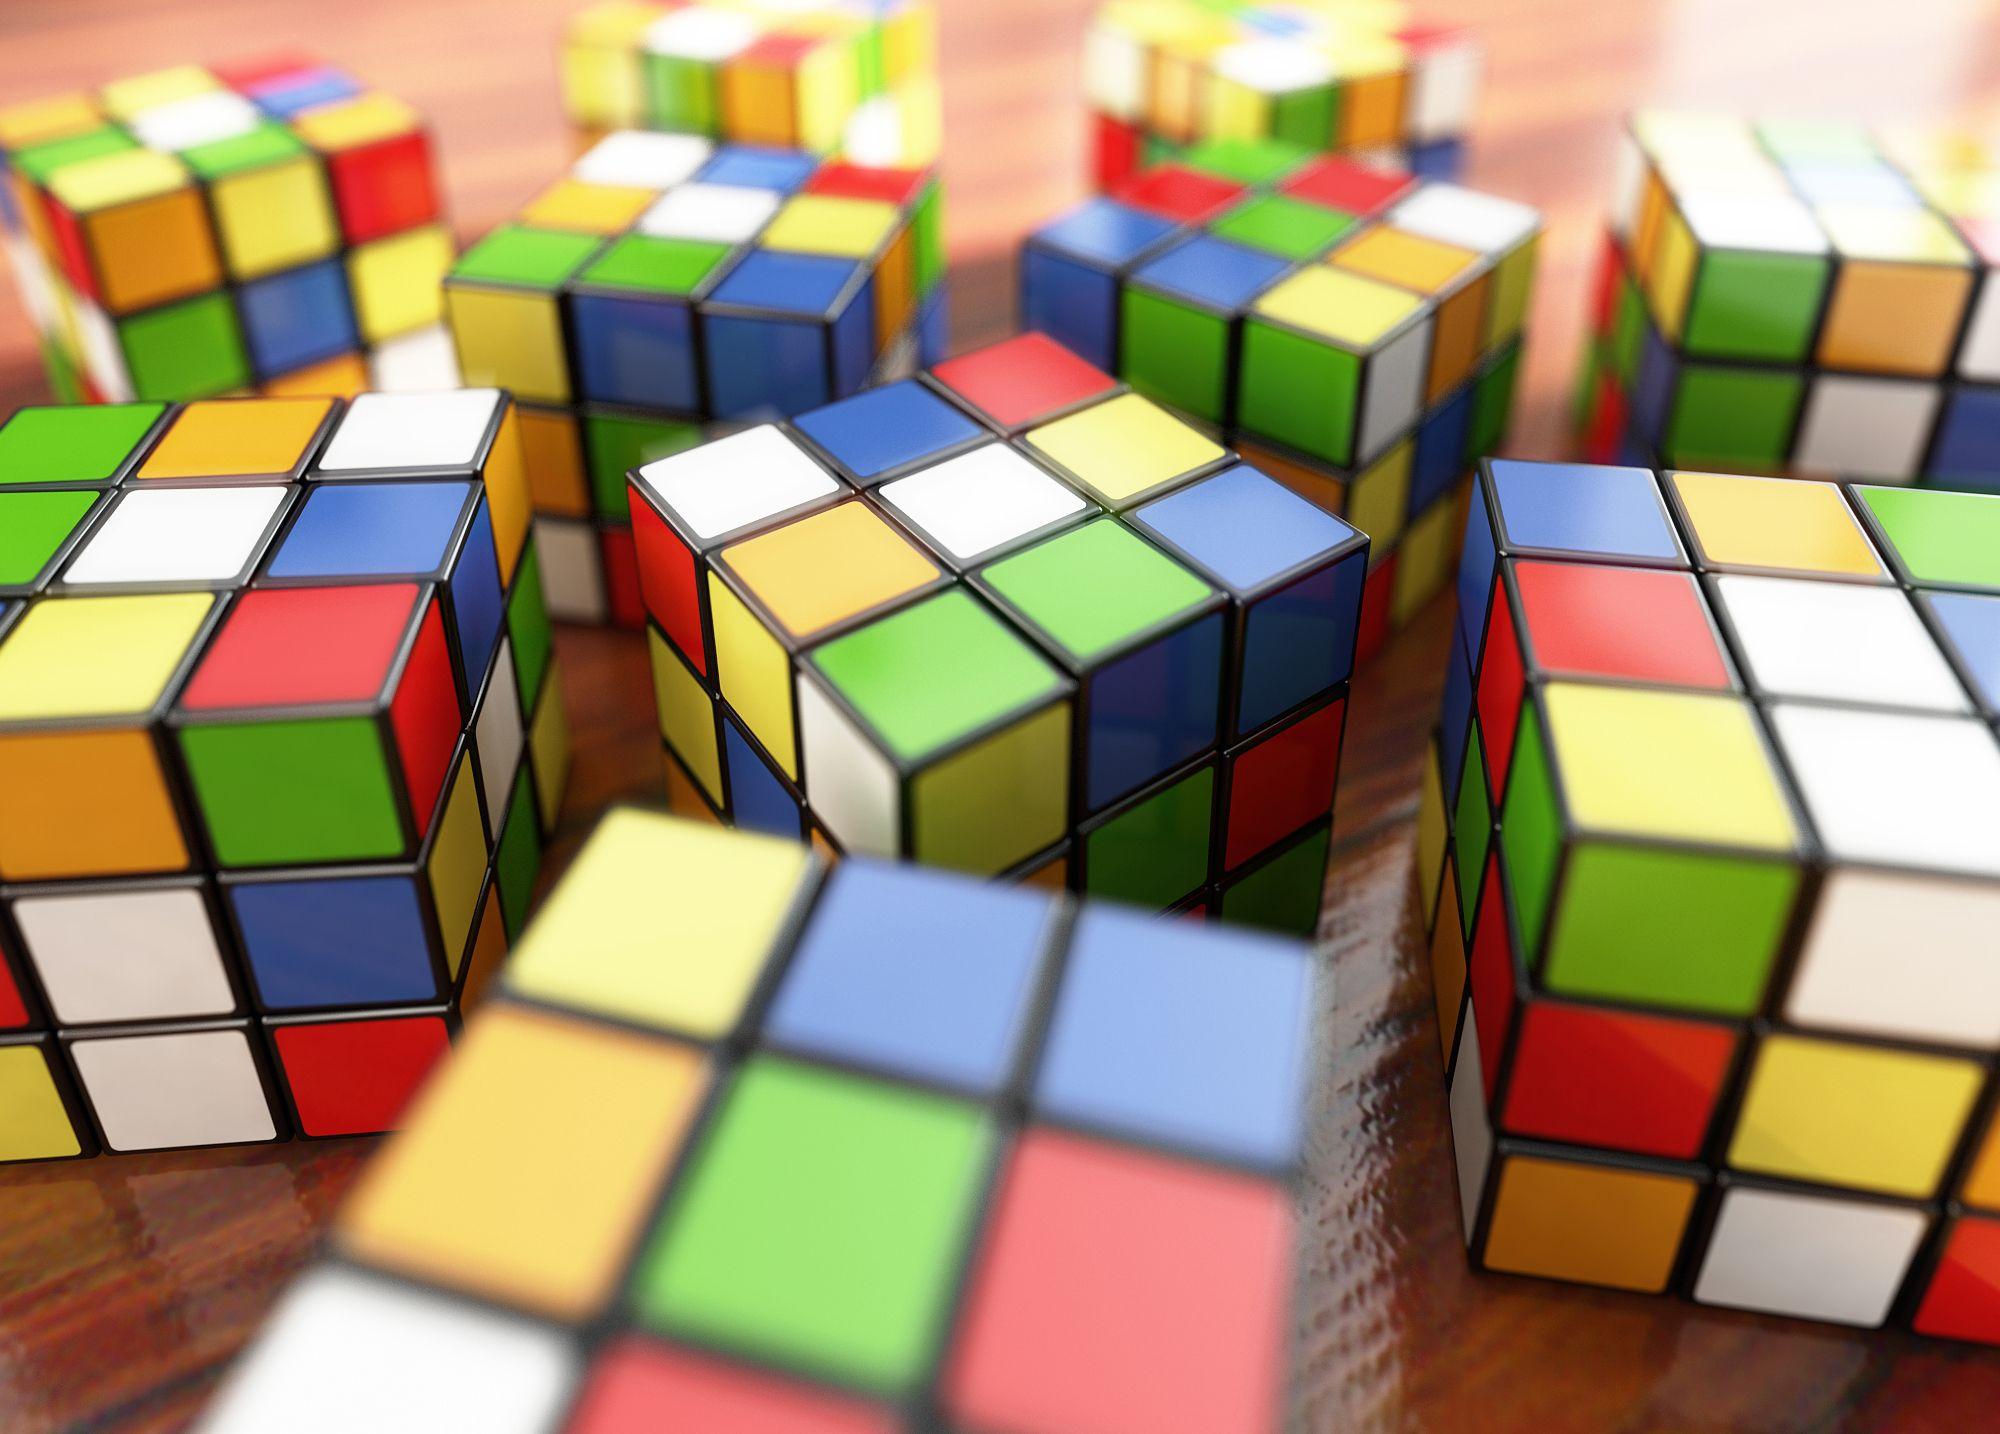 Wallpapers Rubiks Cube.Top 10 Image Of Rubik. Digital Art Tiles